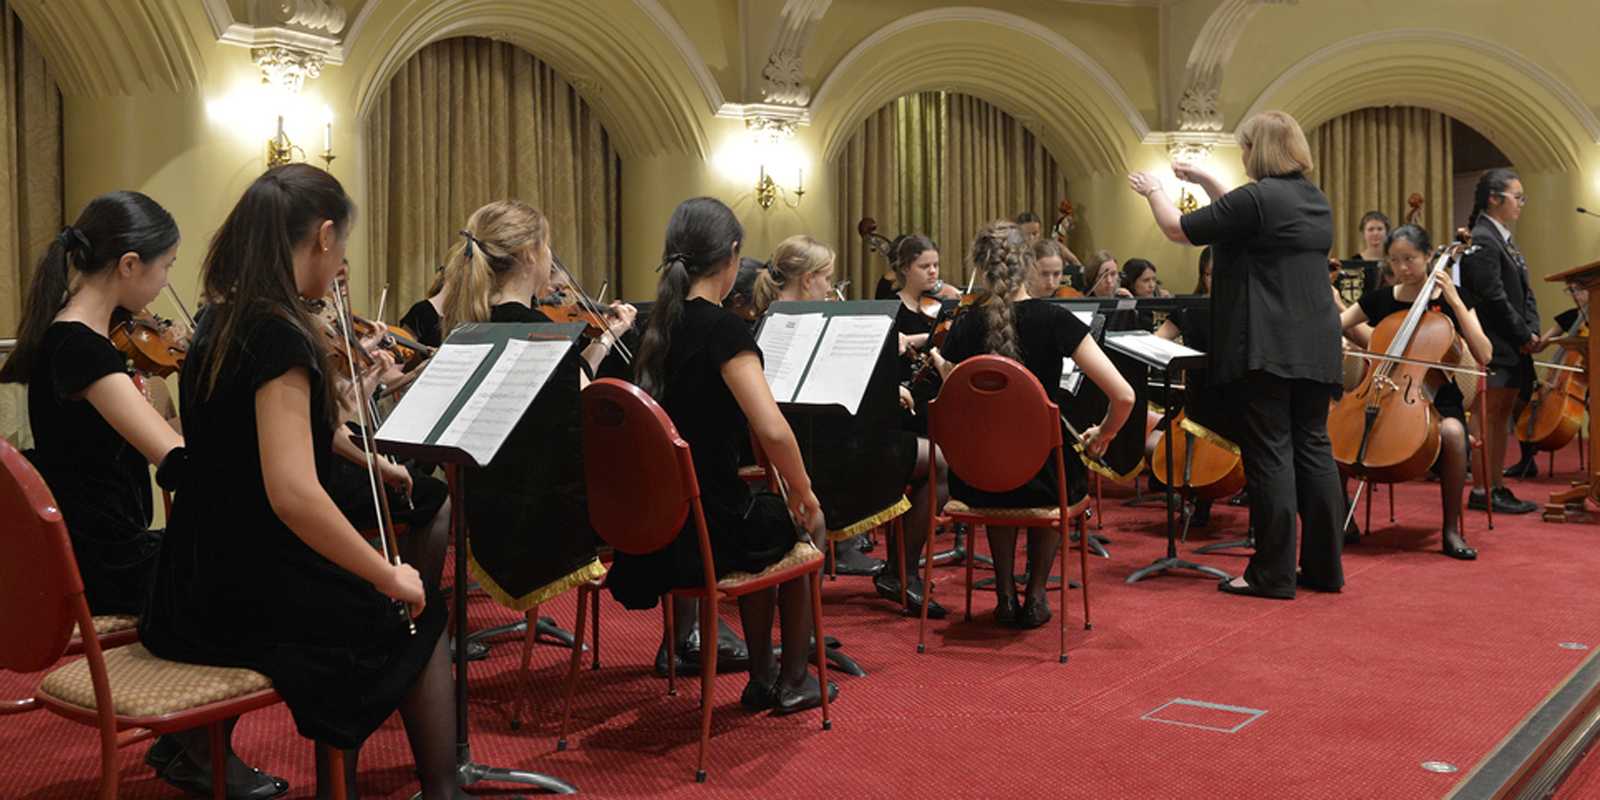 Penrhos College Orchestra